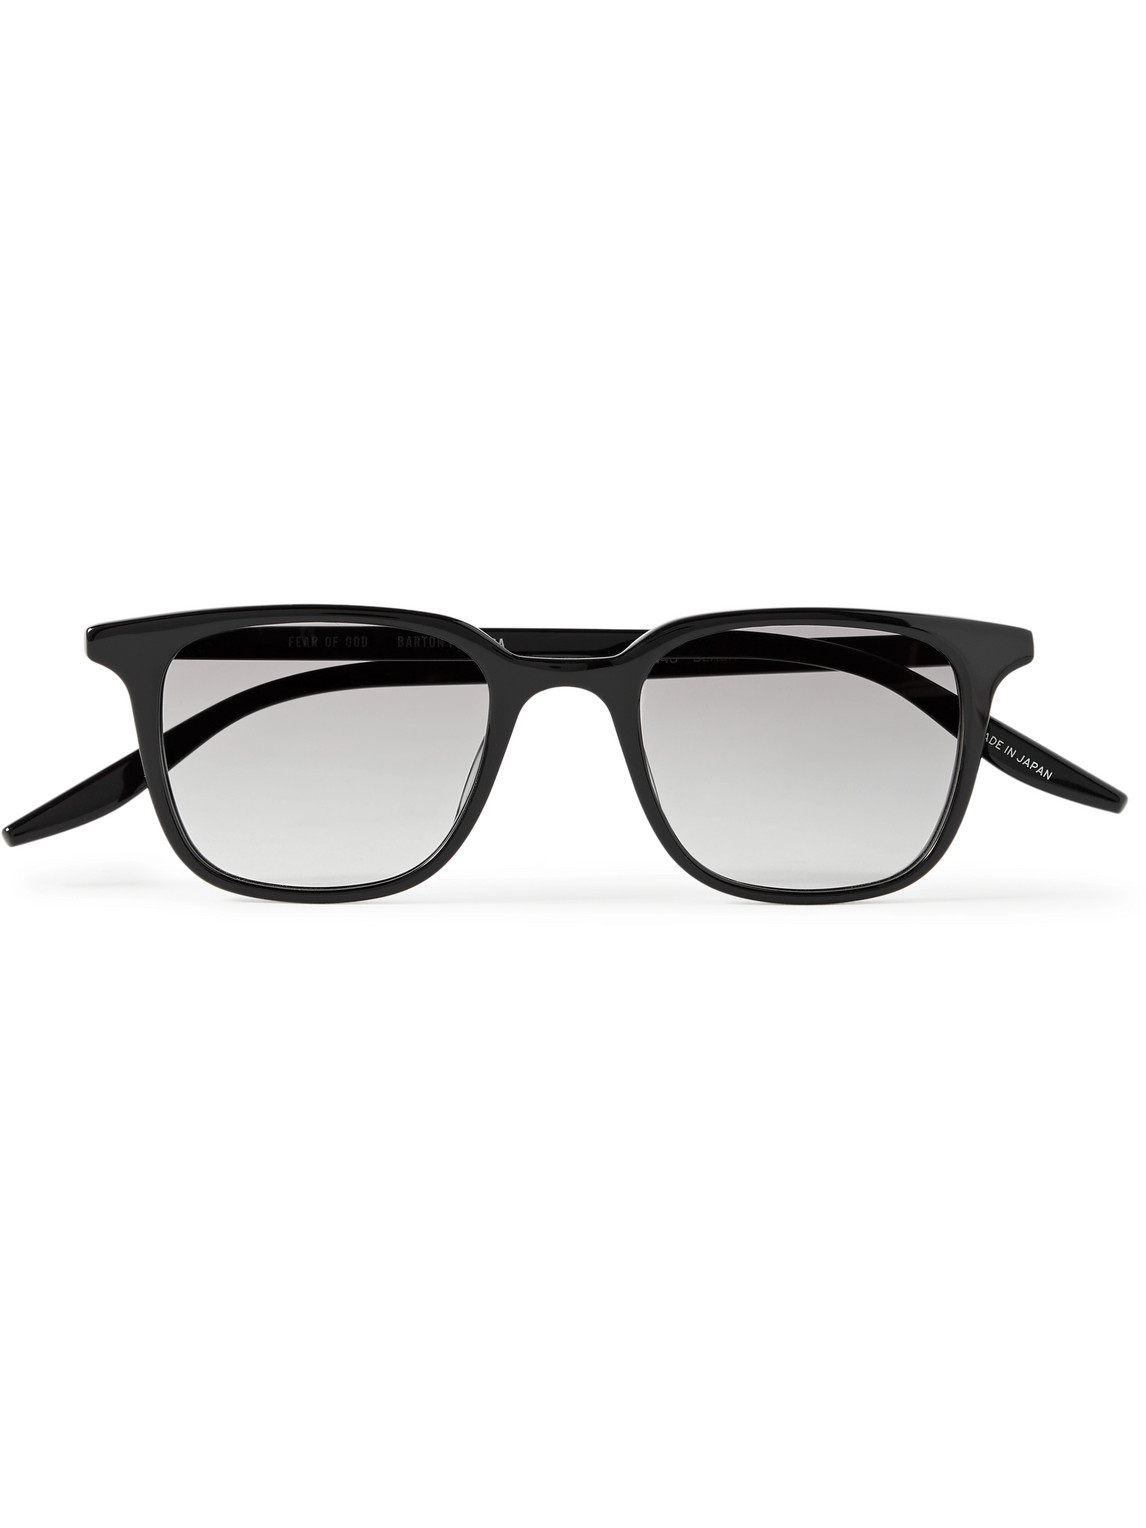 Barton Perreira Square-Frame Acetate Sunglasses